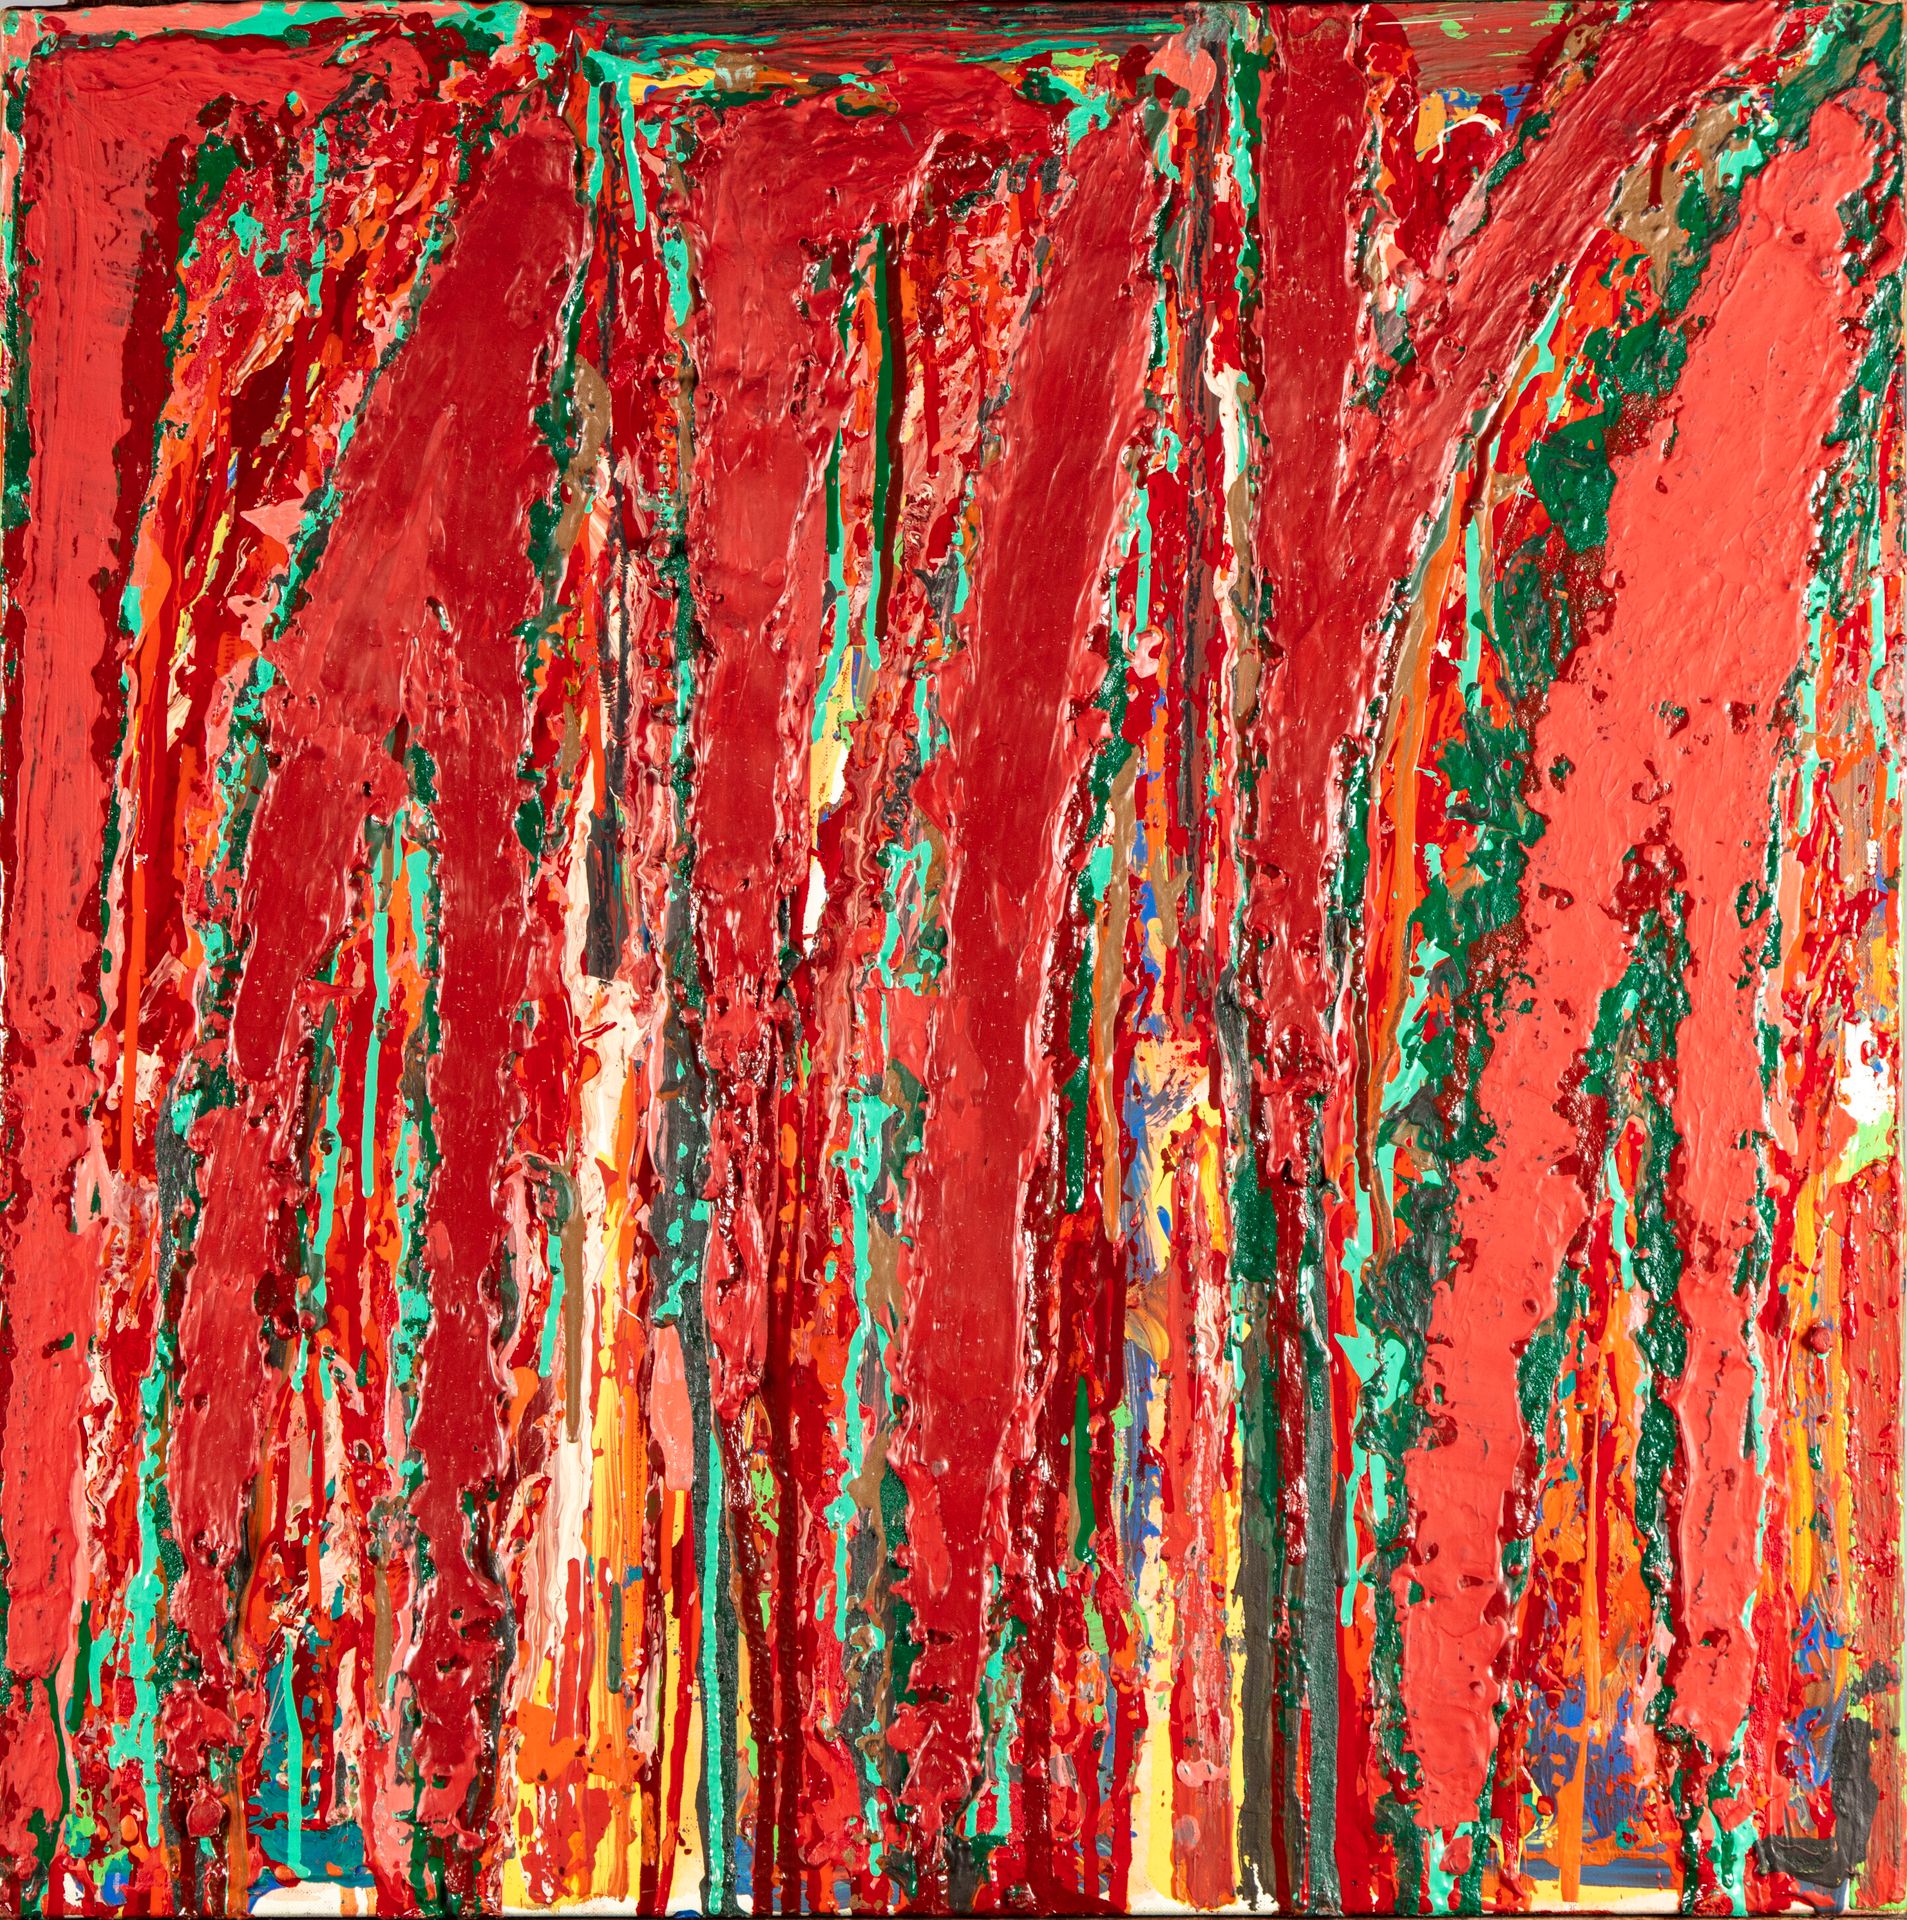 Null 马蒂亚斯-佩雷斯 (1953)

摘要构成

布面油画，背面有签名和日期 1983年

60 x 60厘米